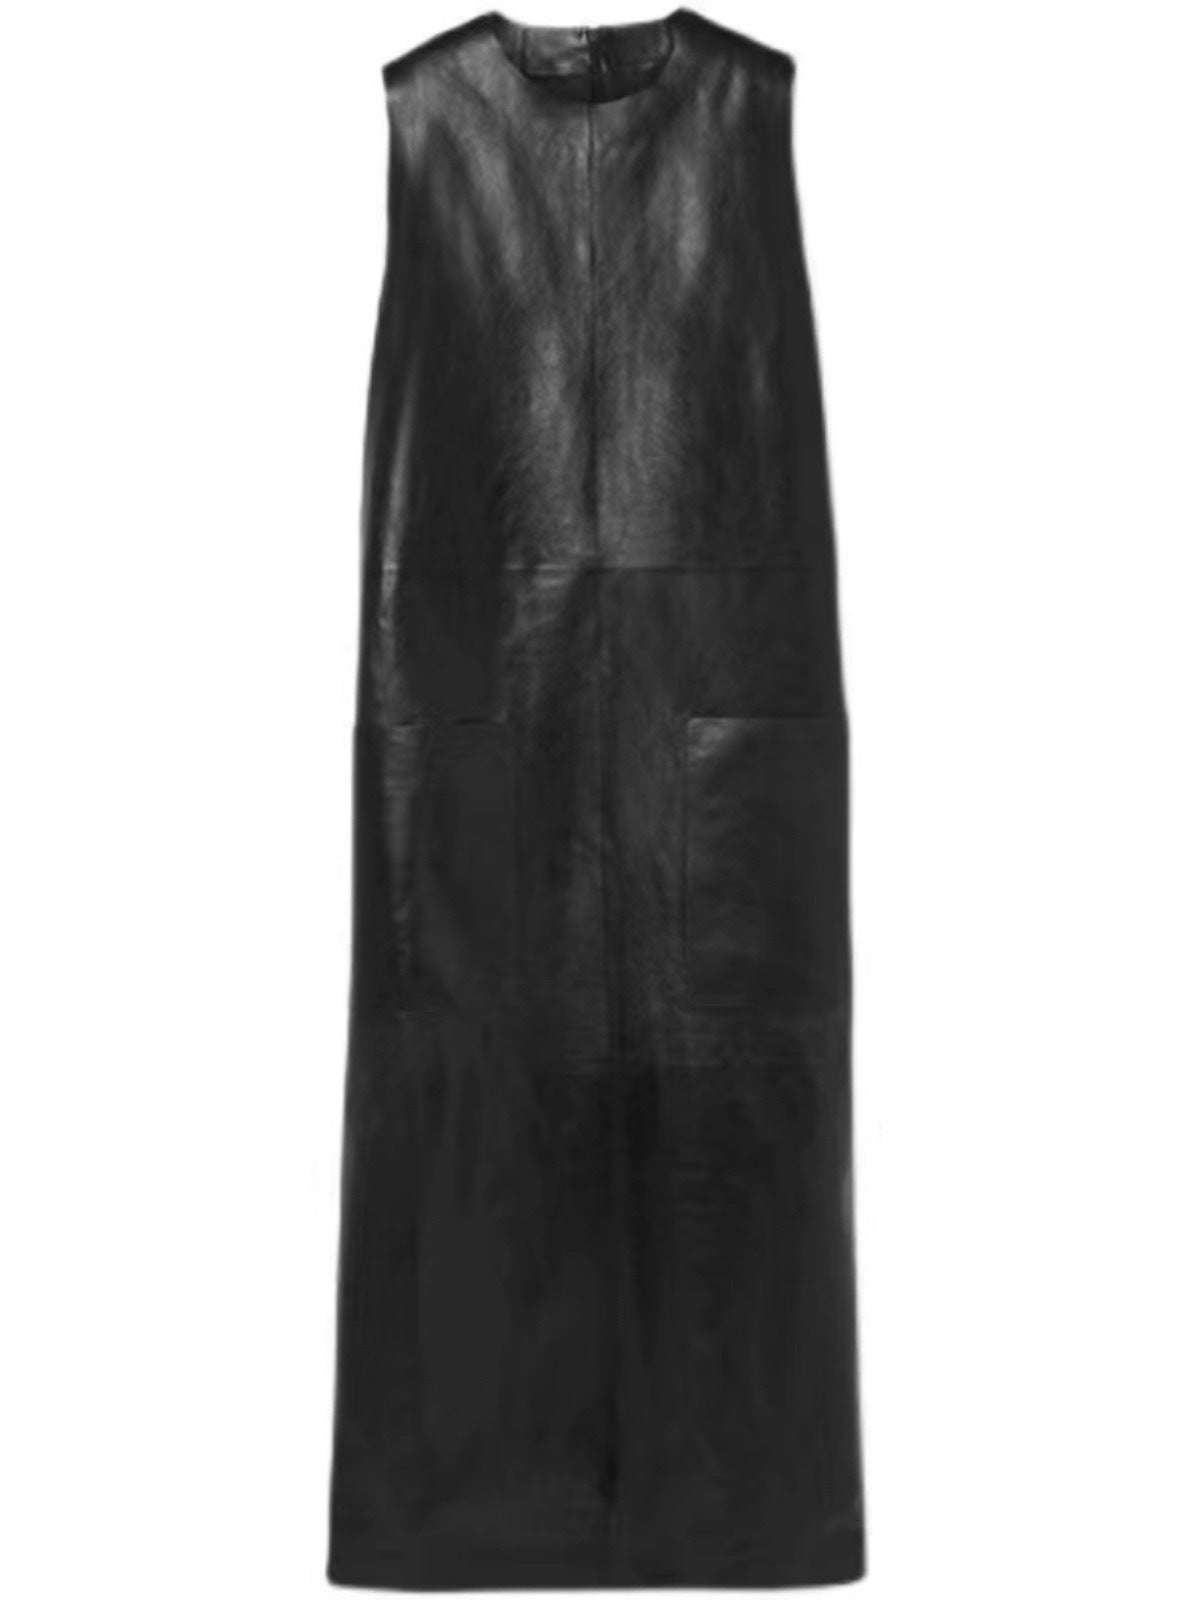 Black Vegan Leather Sleeveless Dress - Kelly Obi New York